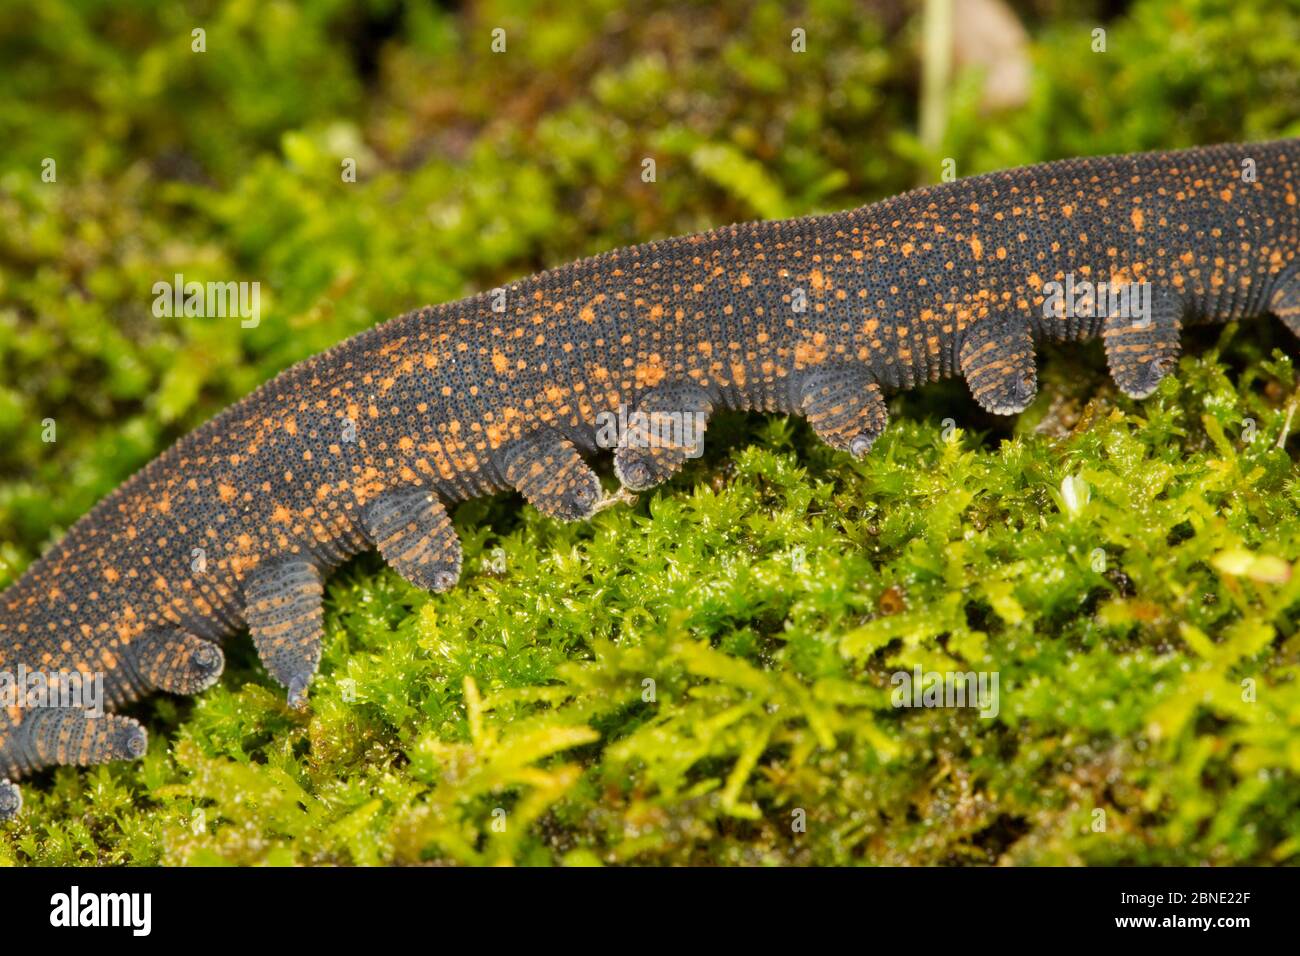 New Zealand peripatus / Velvet worm (Peripatoides novaezealandiae) close-up of legs walking over a moss covered log, Kahuranaki, Hawkes Bay, New Zeala Stock Photo